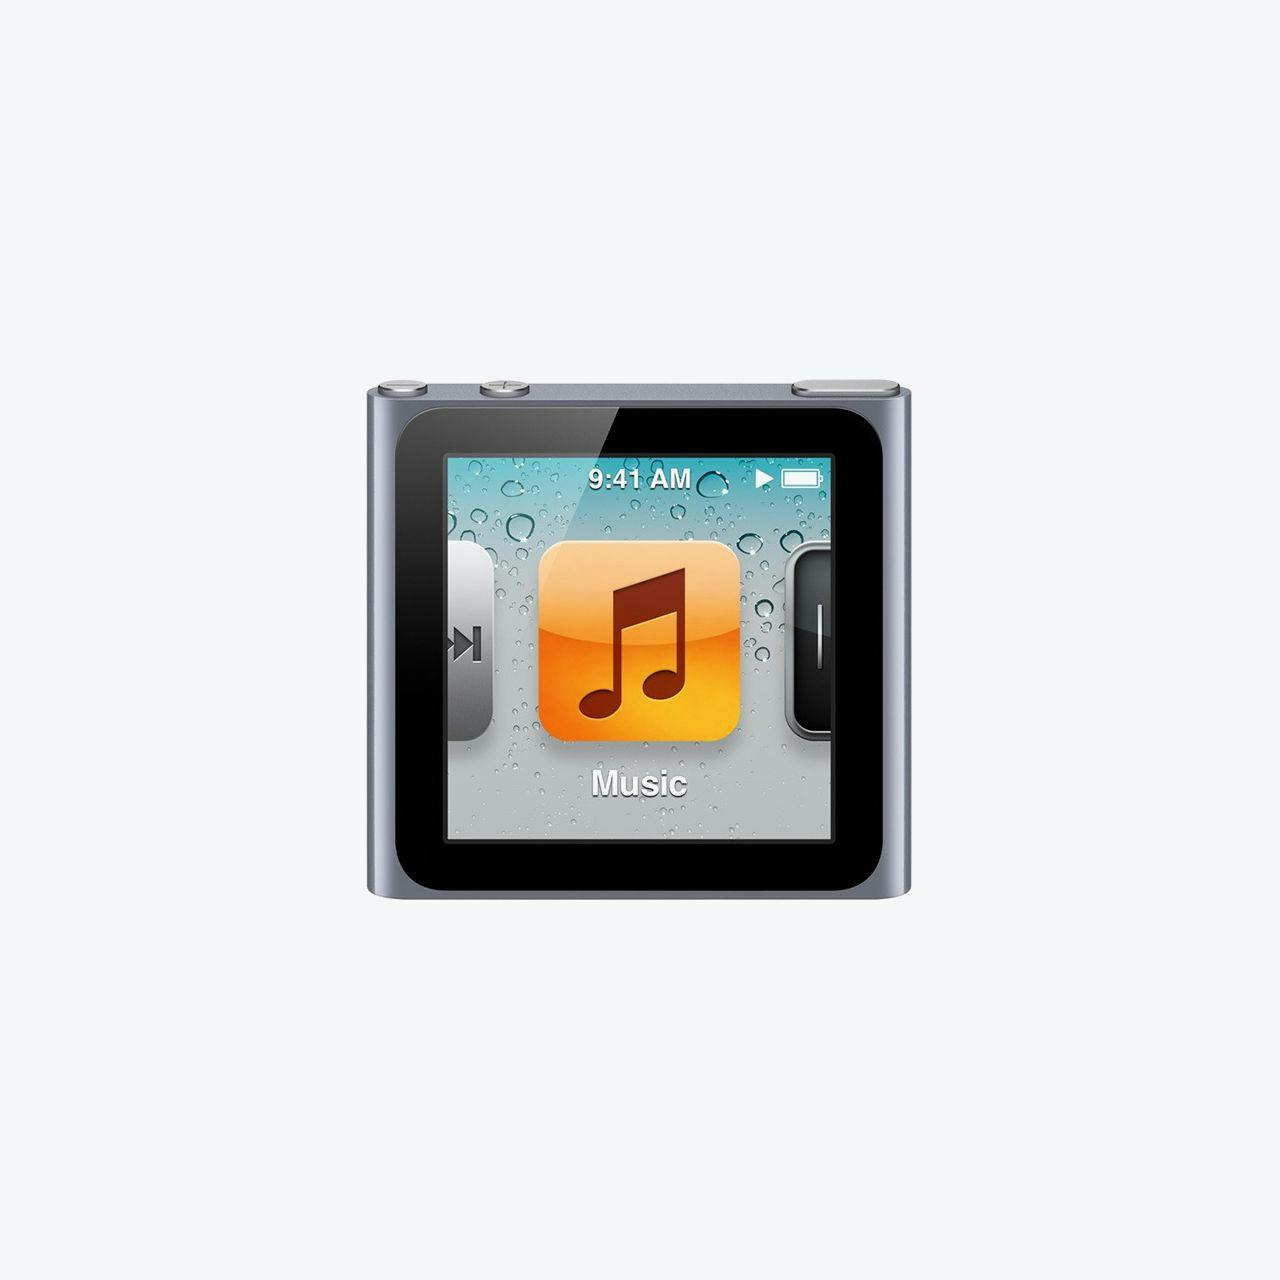 Image of a 6th generation iPod Nano.